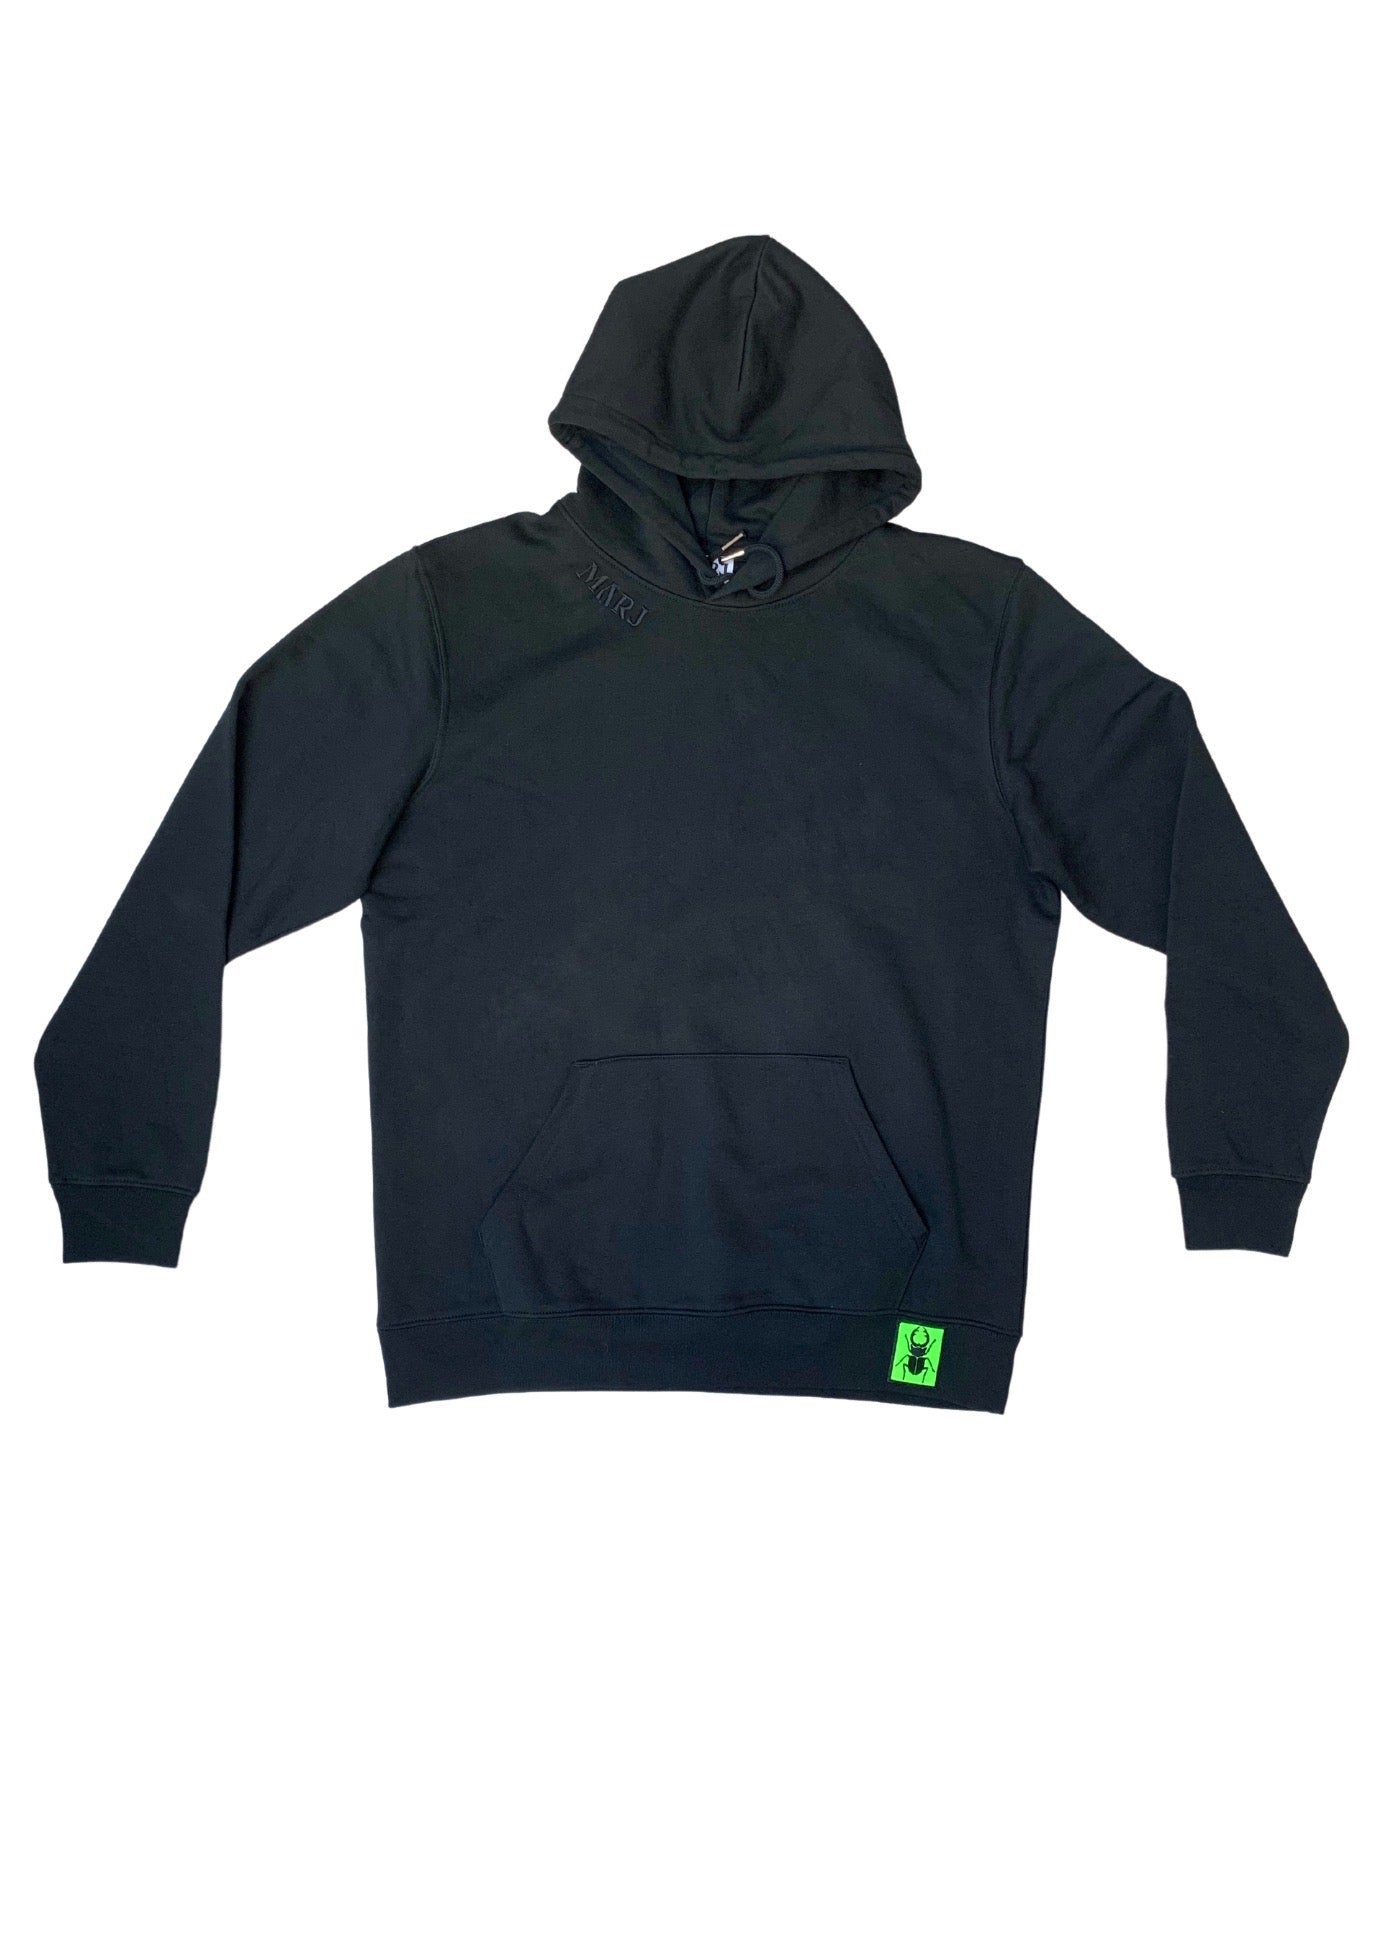 MARJ sustainable fashion black hoodie black embroidery streetwear